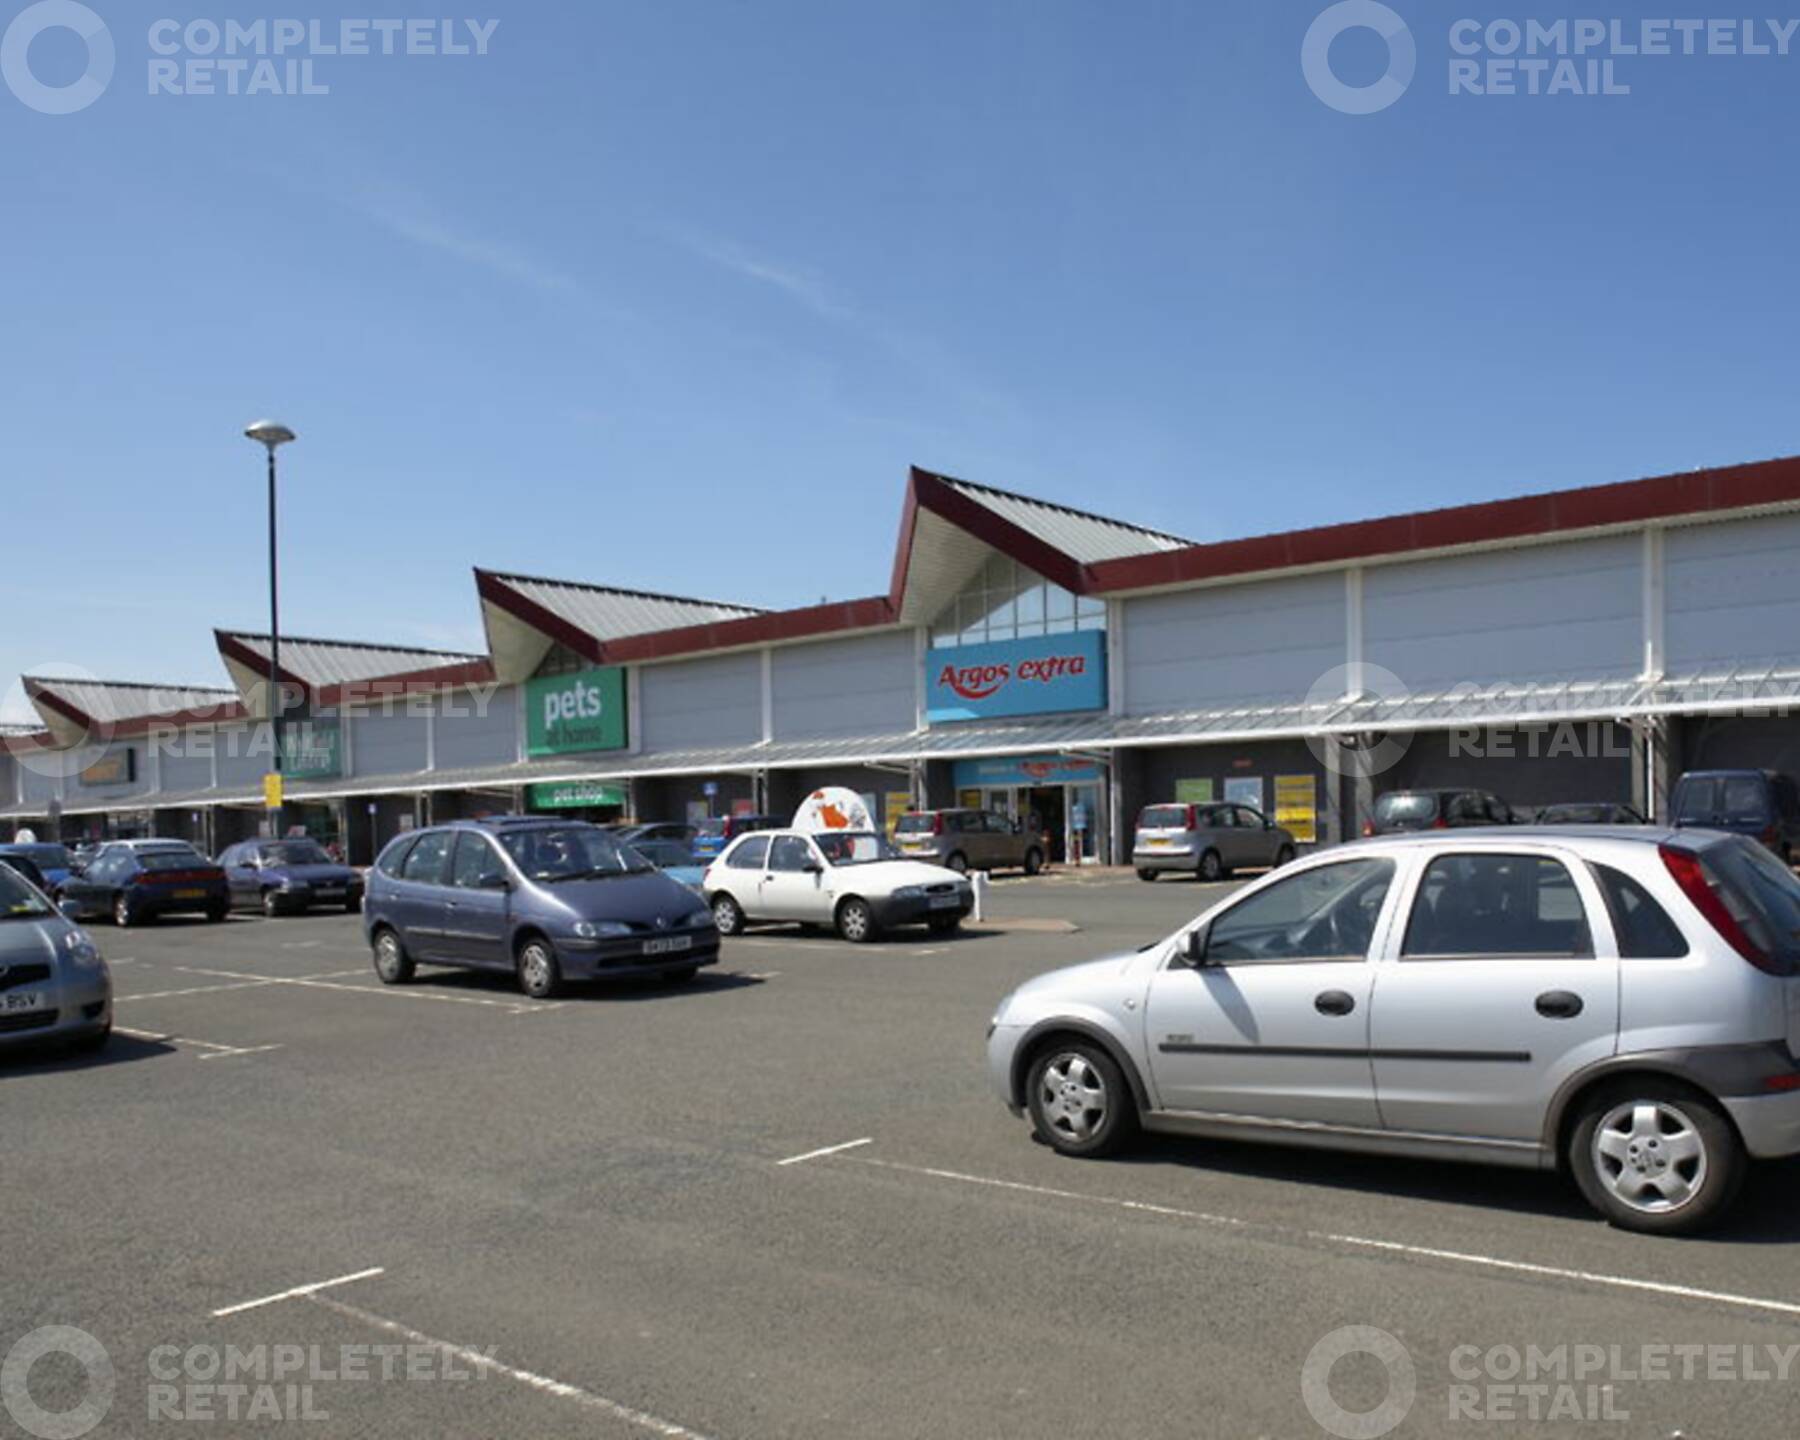 Hylton Riverside Retail Park